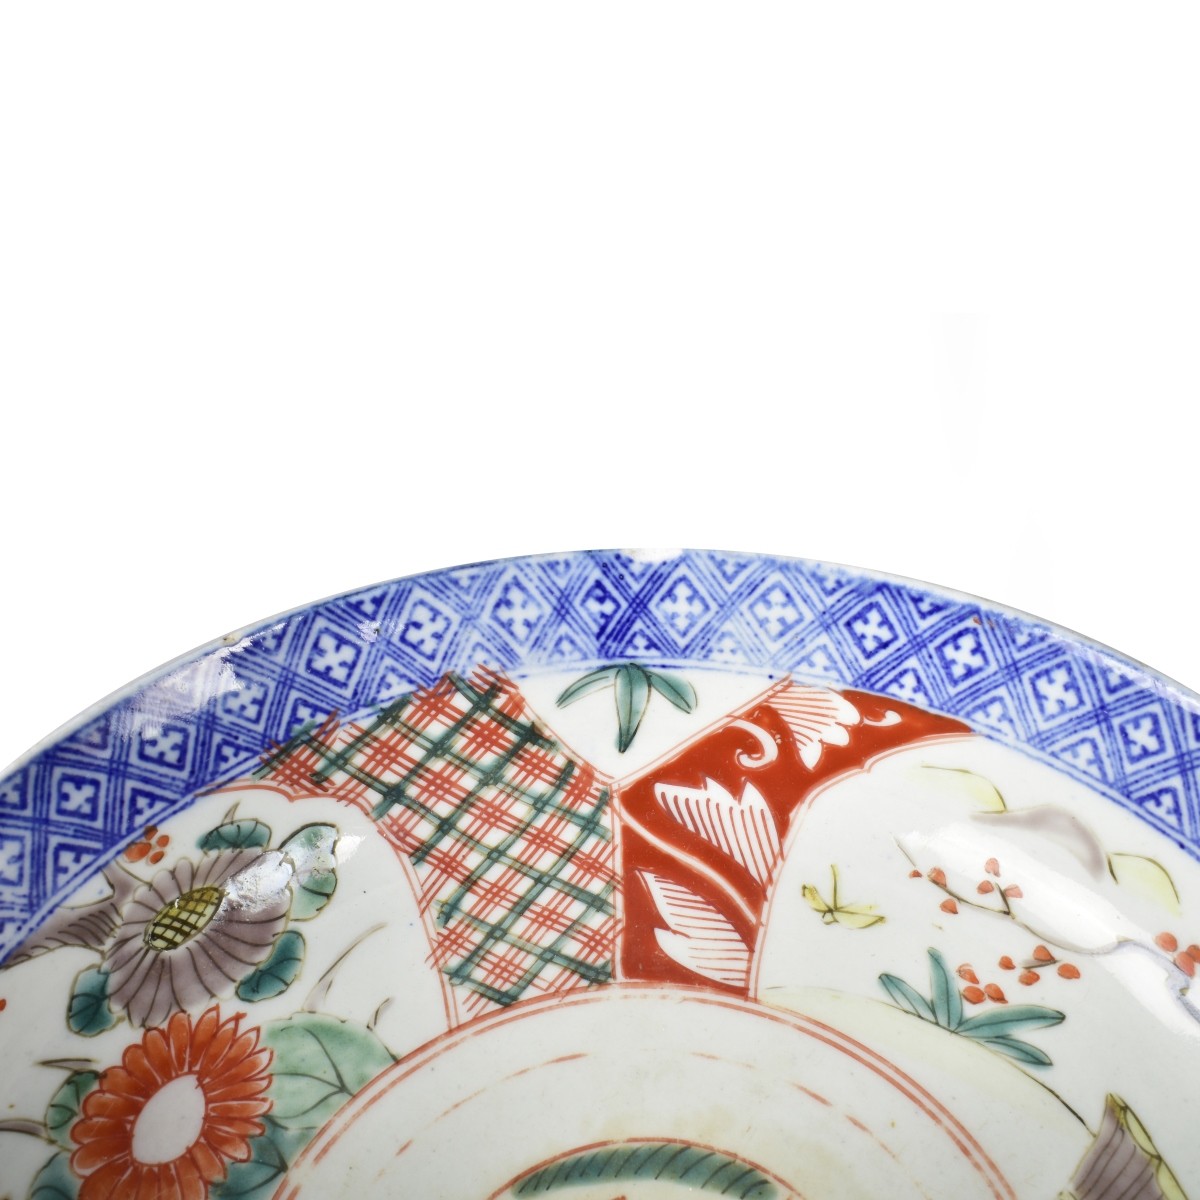 Two Antique Asian Porcelain Tableware